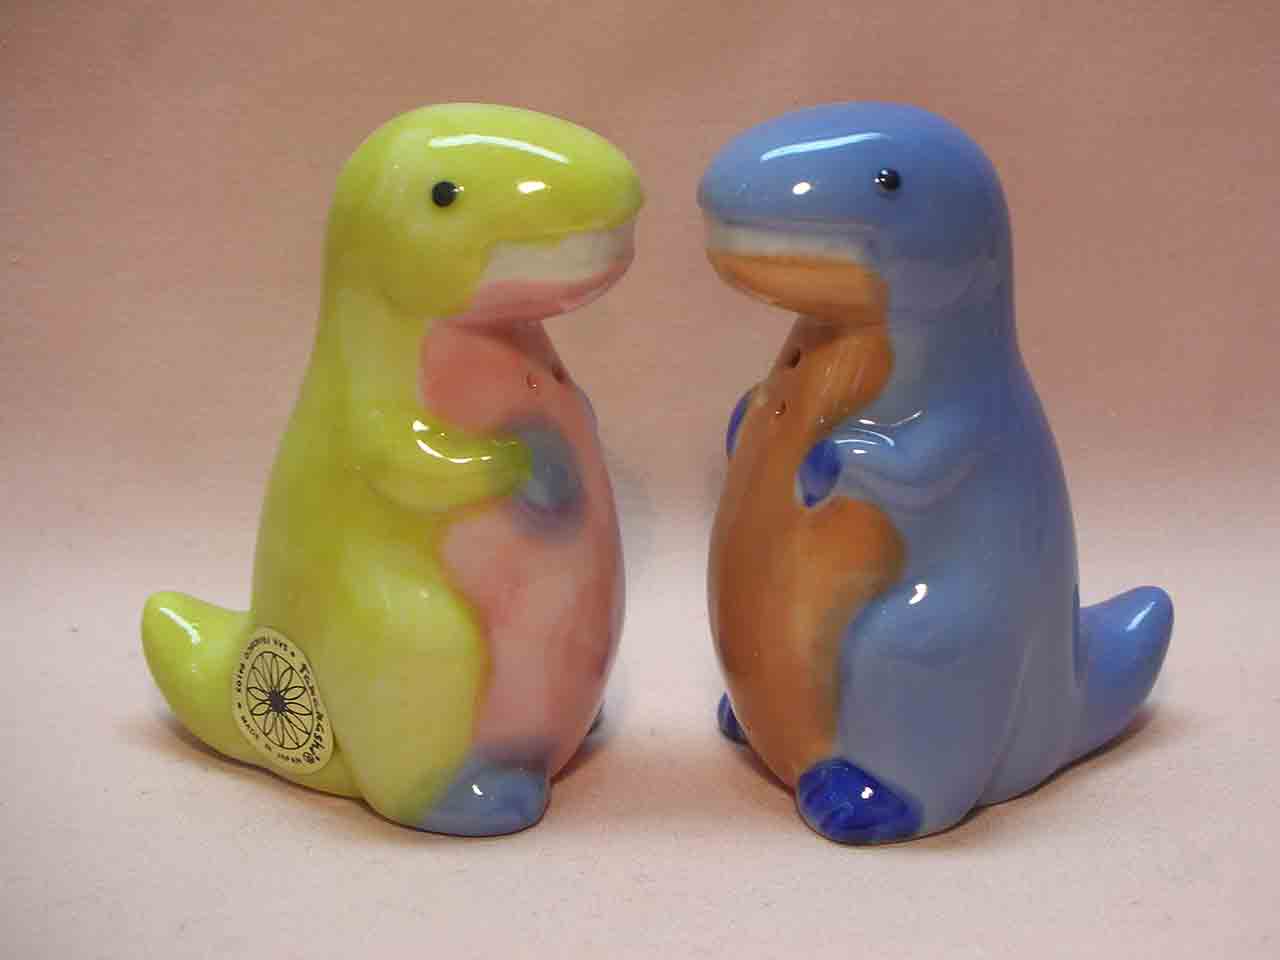 Takahashi Japan little colorful dinosaurs series of salt and pepper shakers - tyrannosaurus